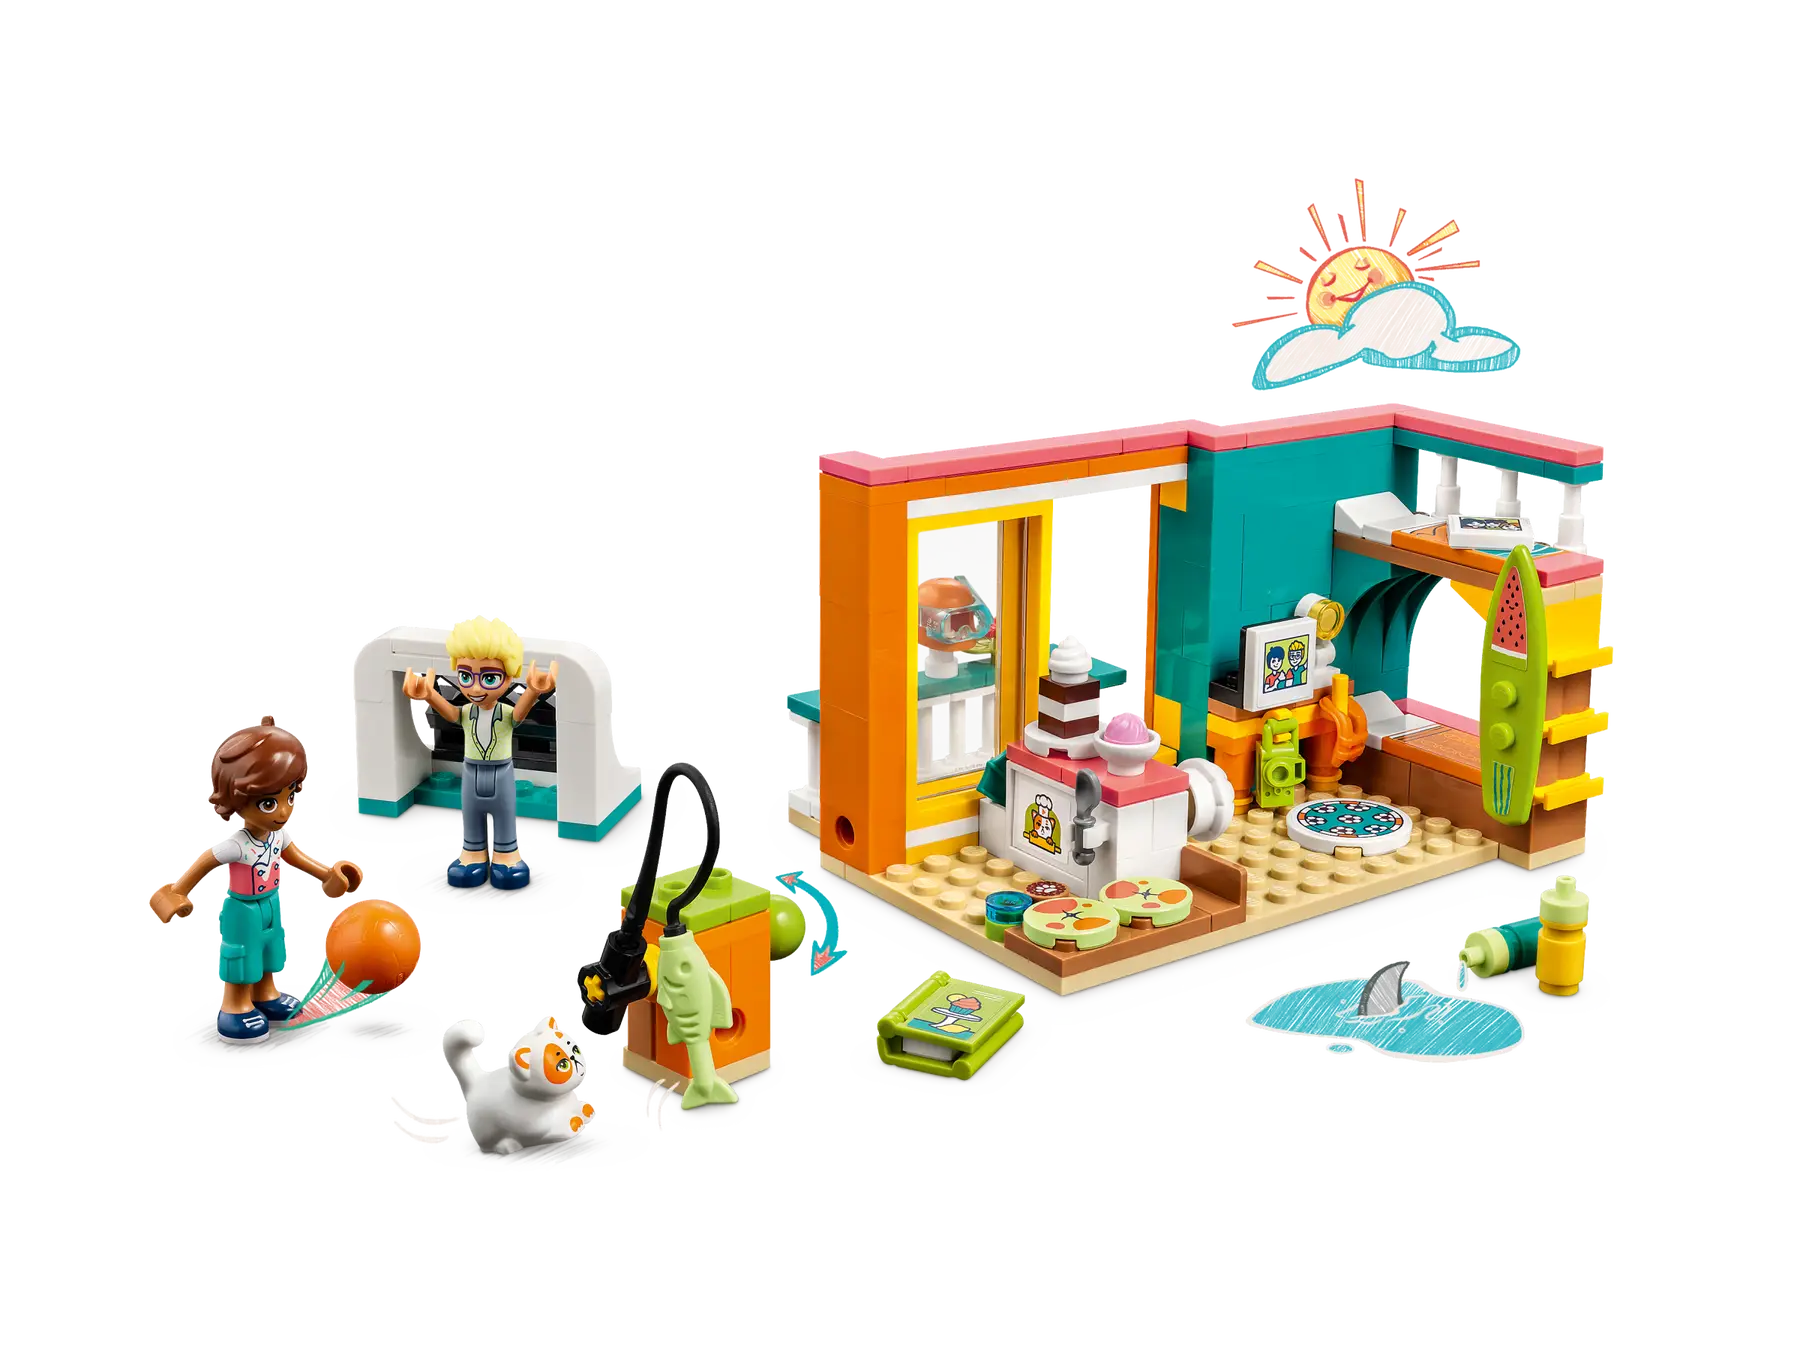 Lego Friends - Leo's Room